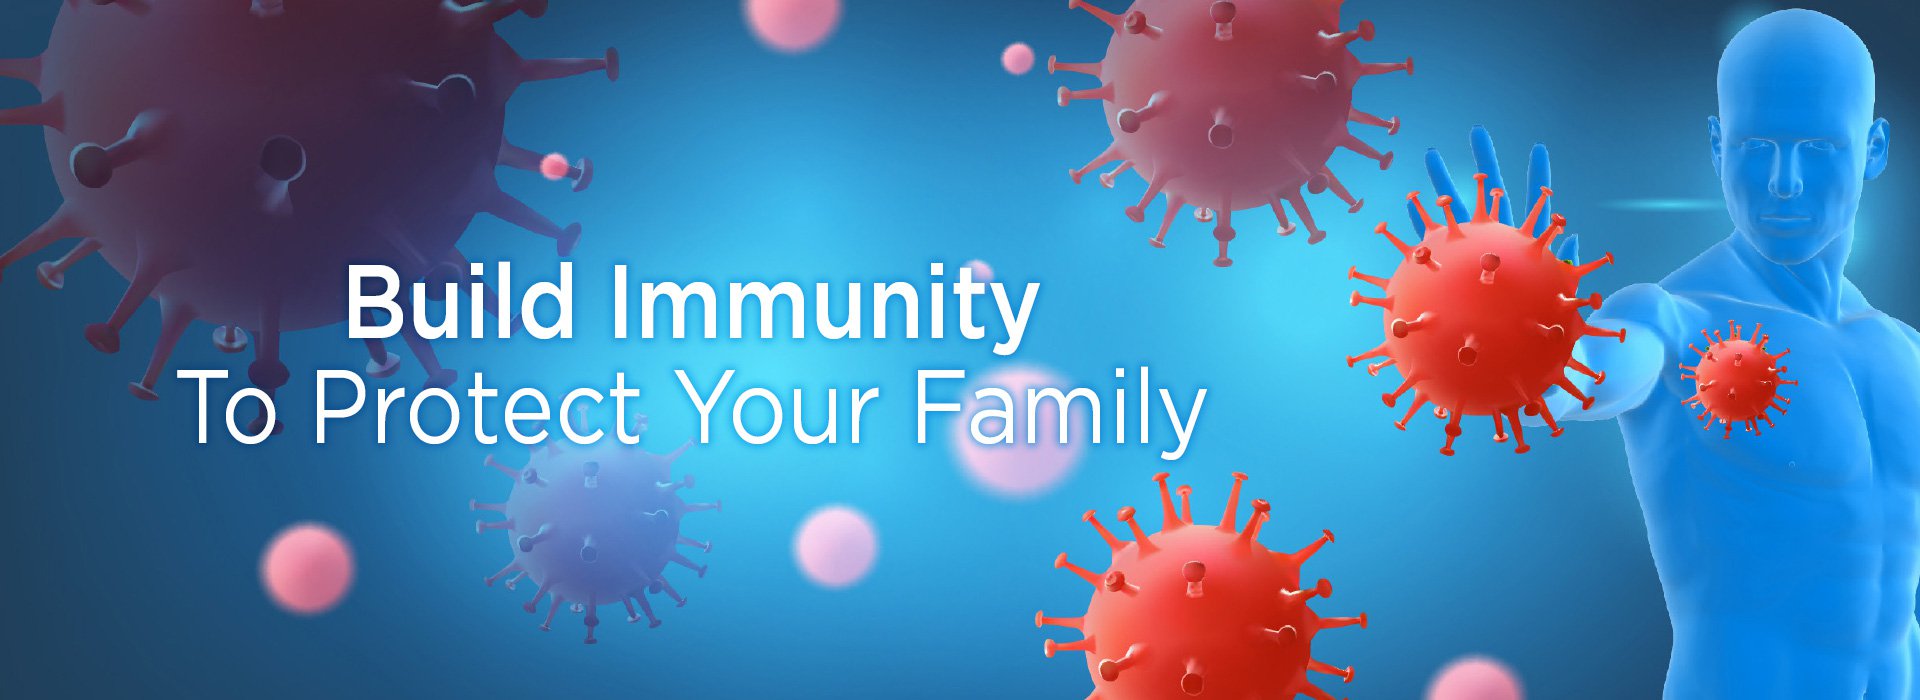 New Image International:Build Immunity Protect Your Family